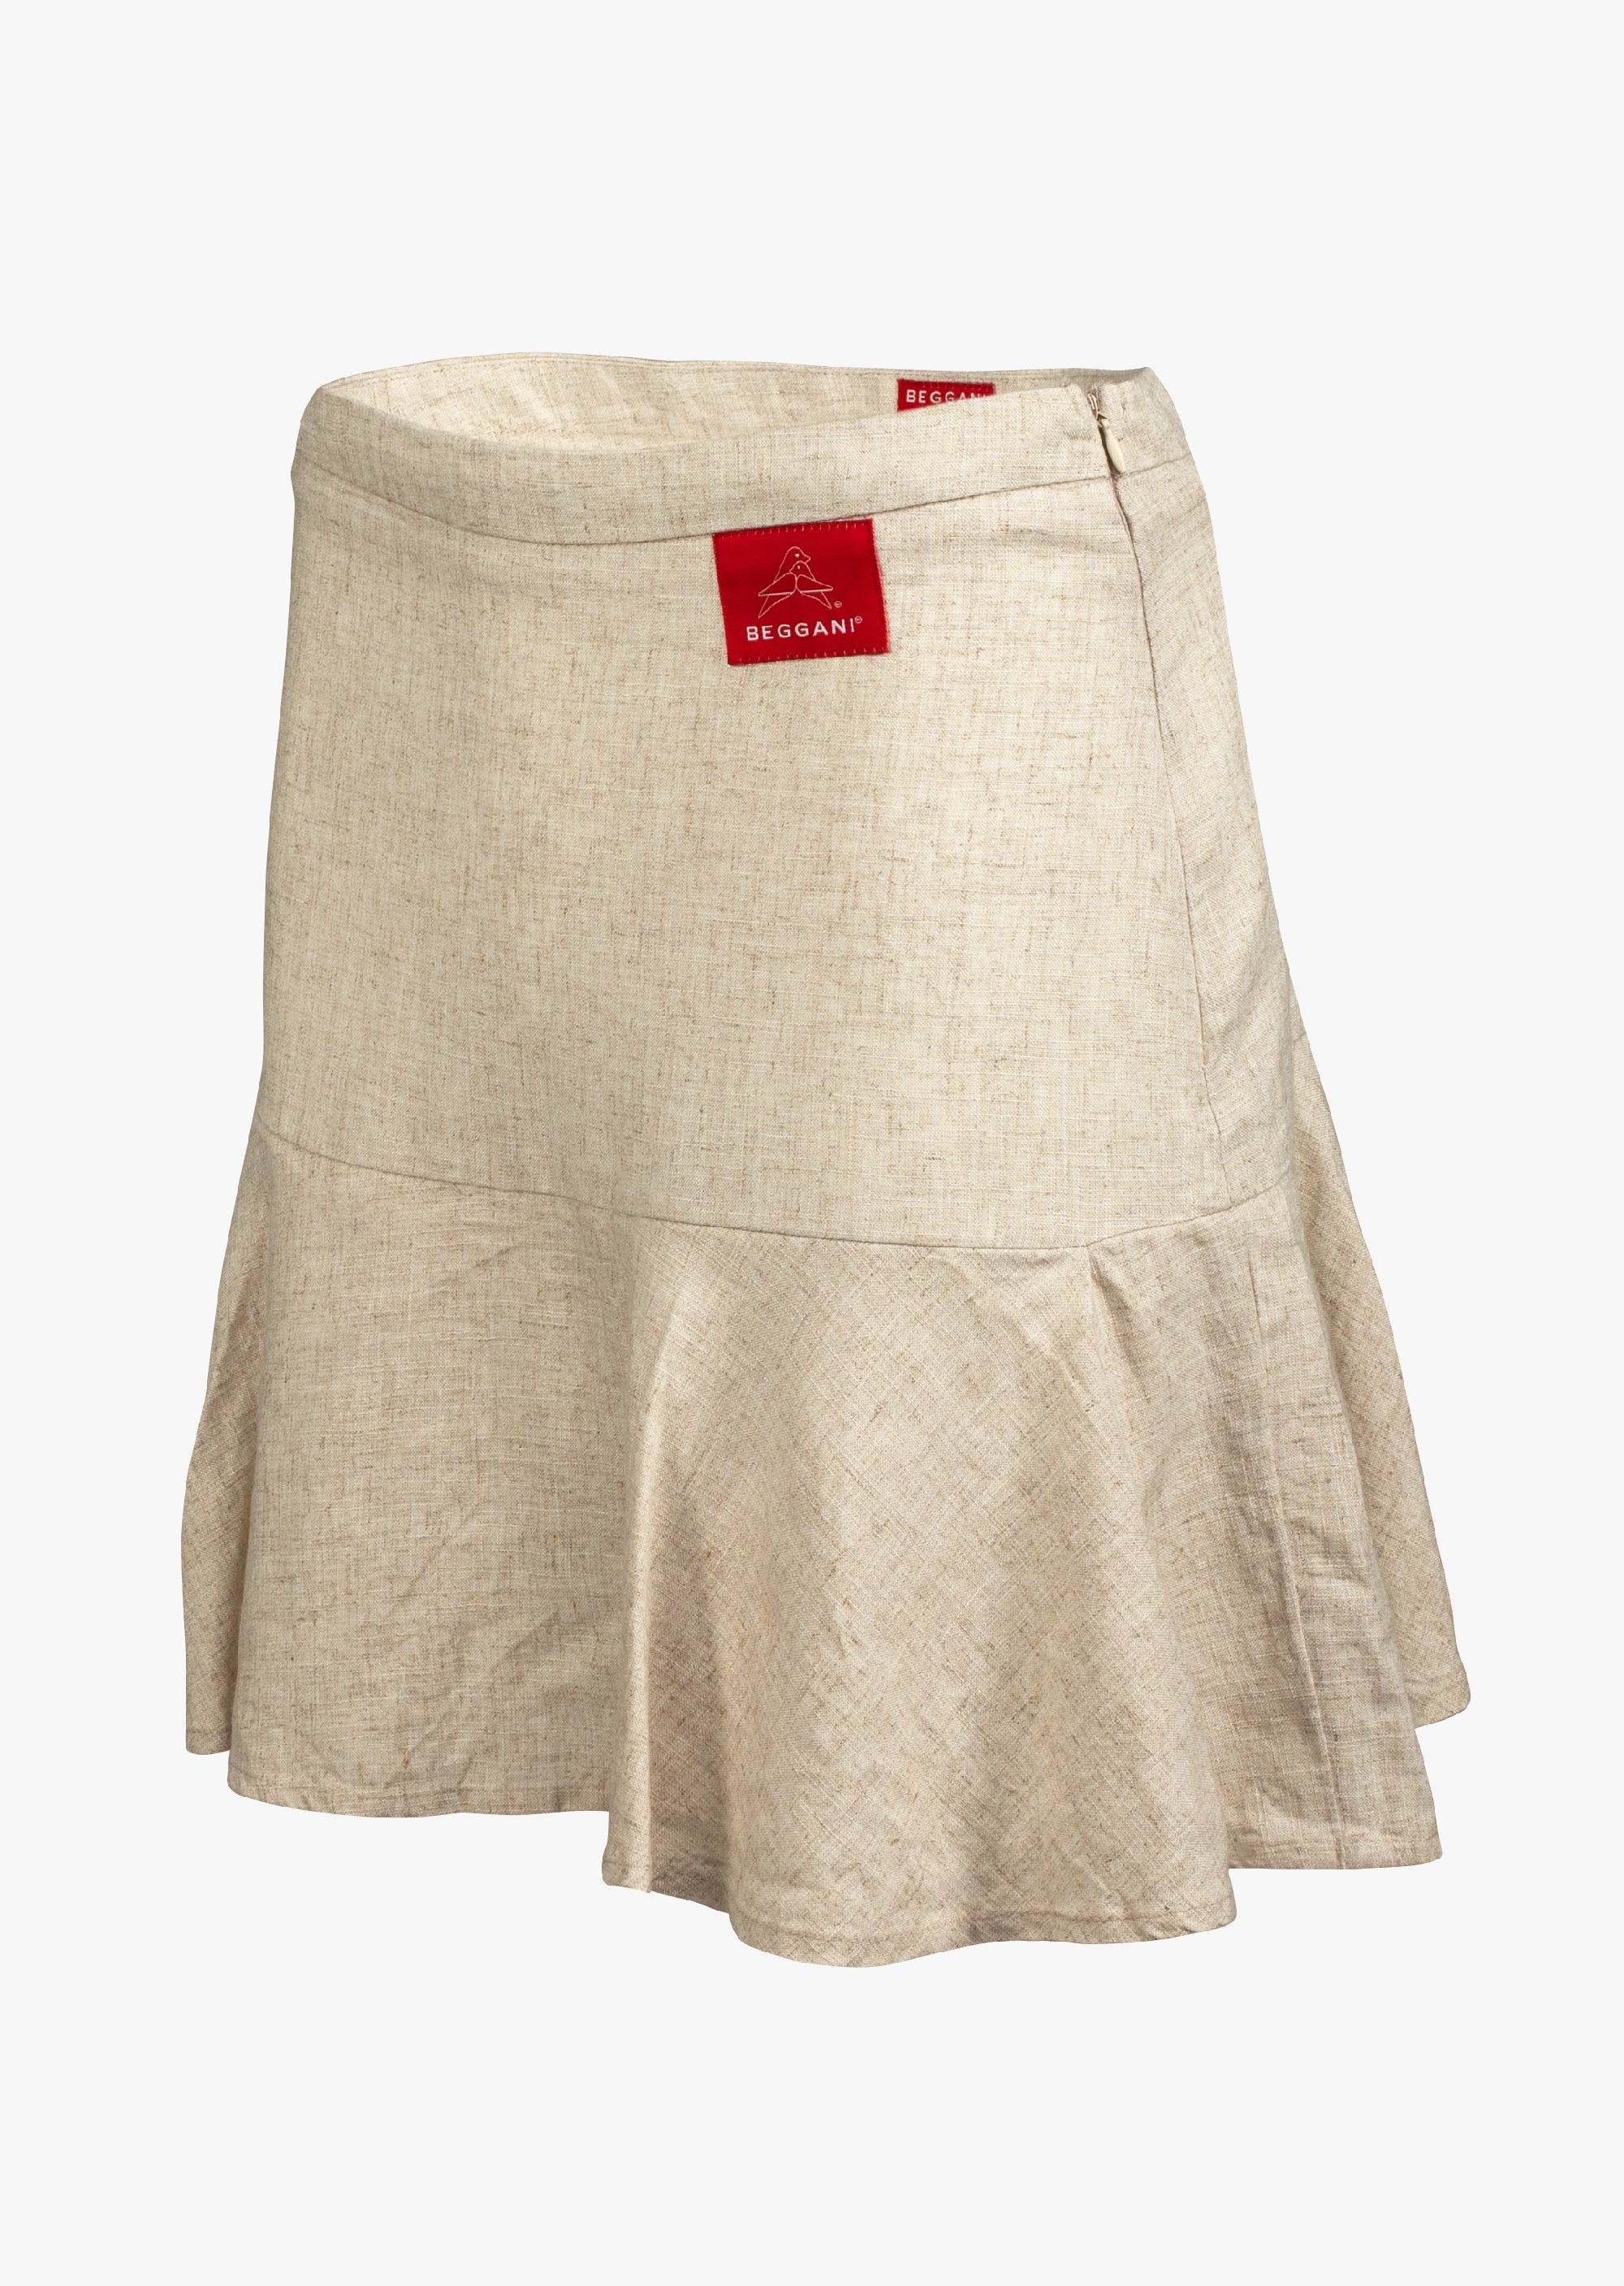 Skirt of soft linen with logo BEGGANI